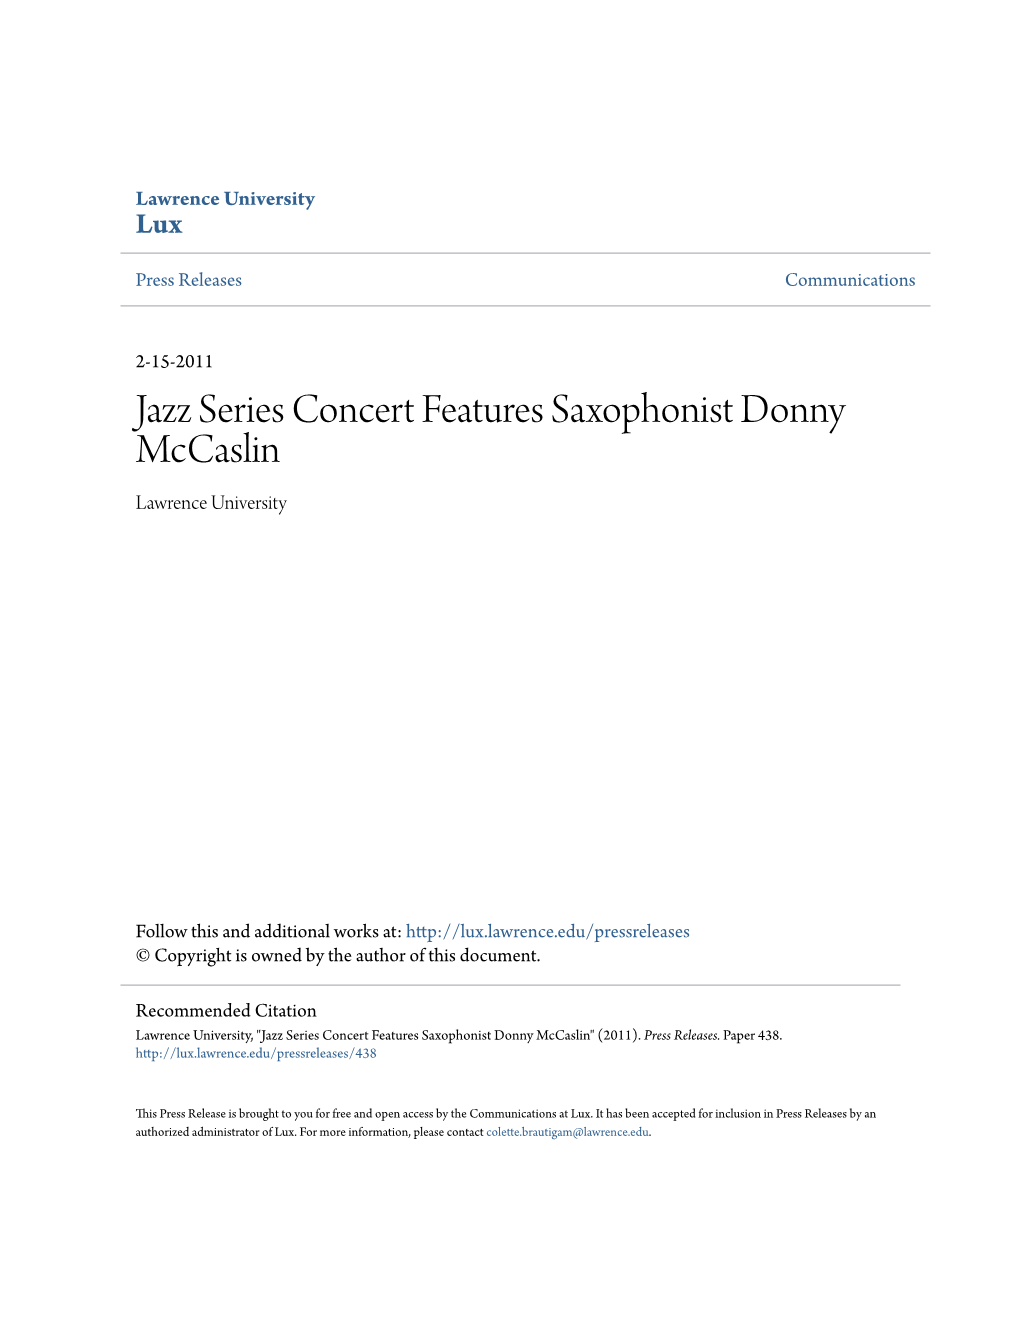 Jazz Series Concert Features Saxophonist Donny Mccaslin Lawrence University